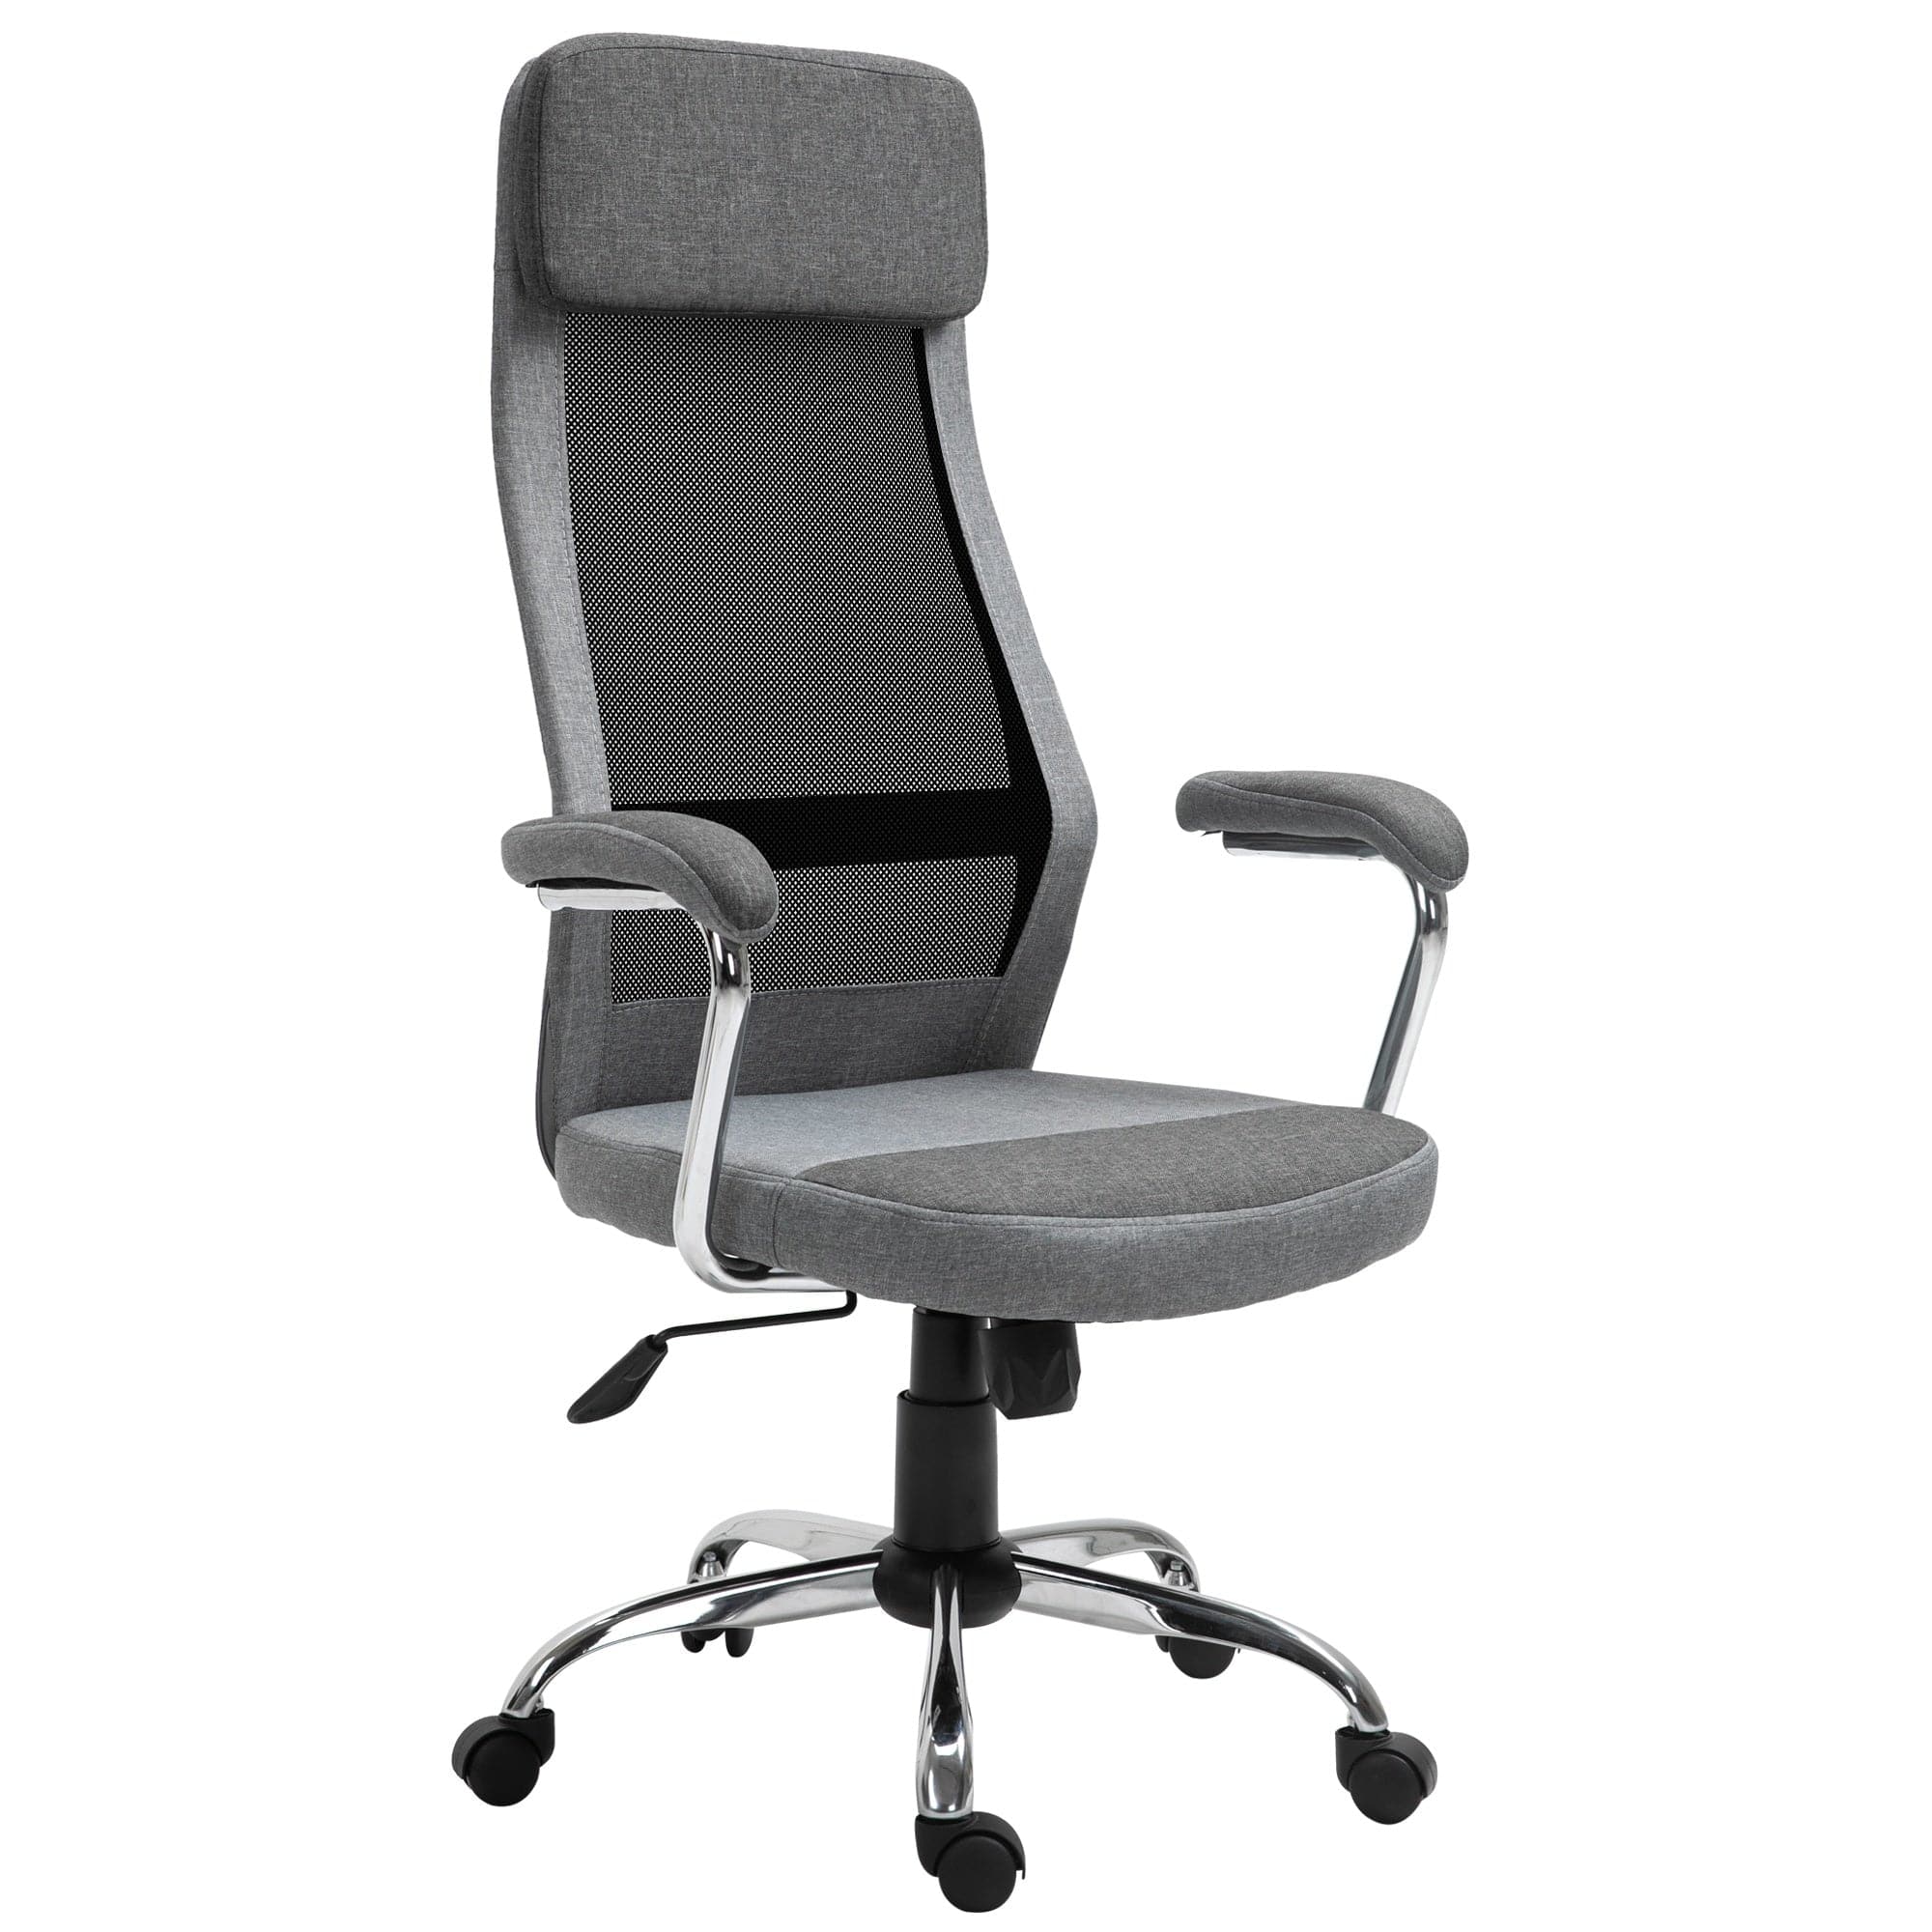 ProperAV Extra Linen-Feel Mesh Fabric High Back Swivel Office Chair - Grey